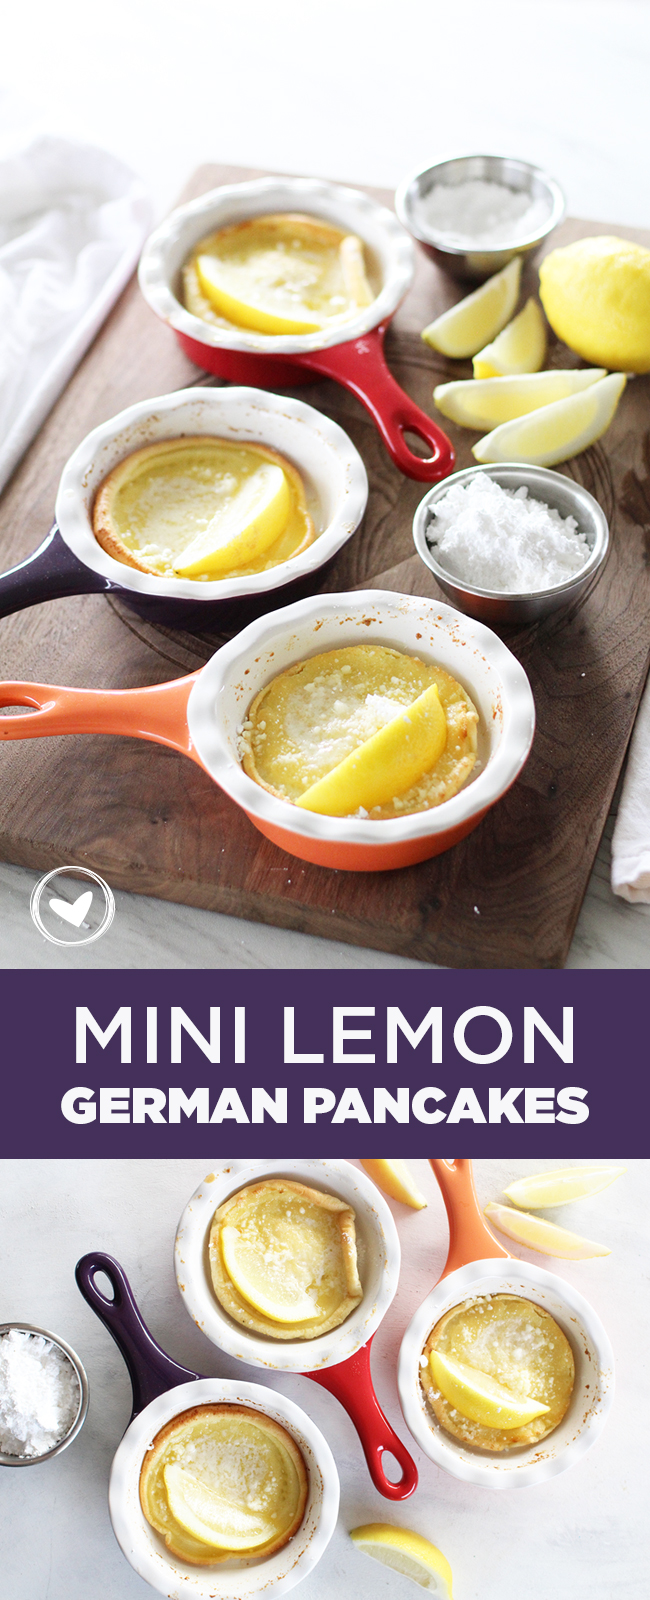 Mini lemon german pancakes